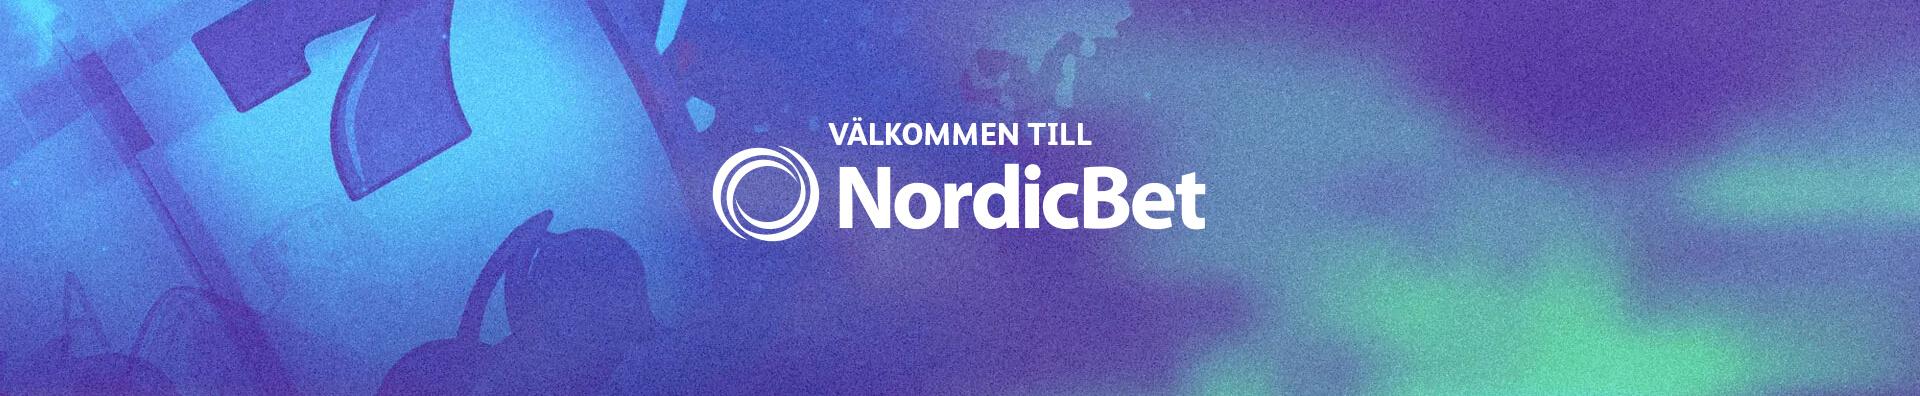 NordicBet banner